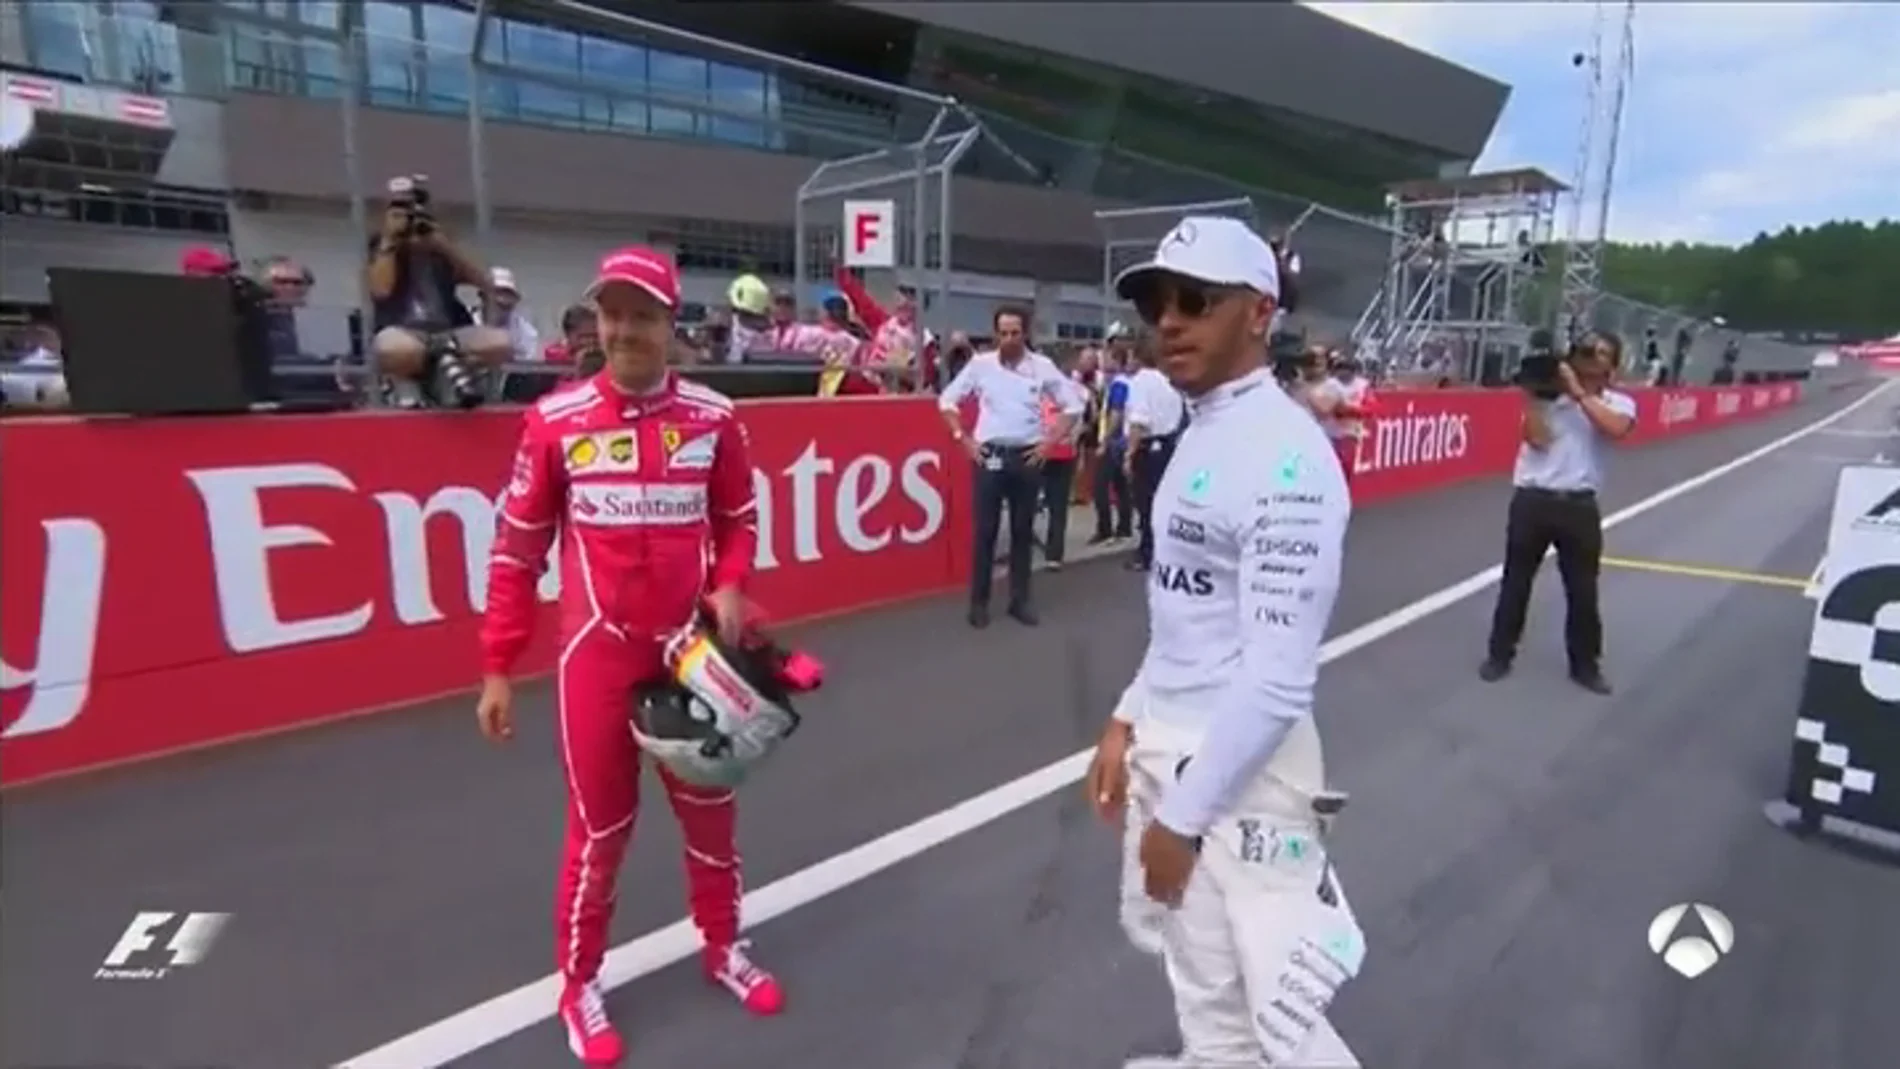 La 'cobra' de Hamilton a Vettel en público: se niega a darle la mano a Vettel en público